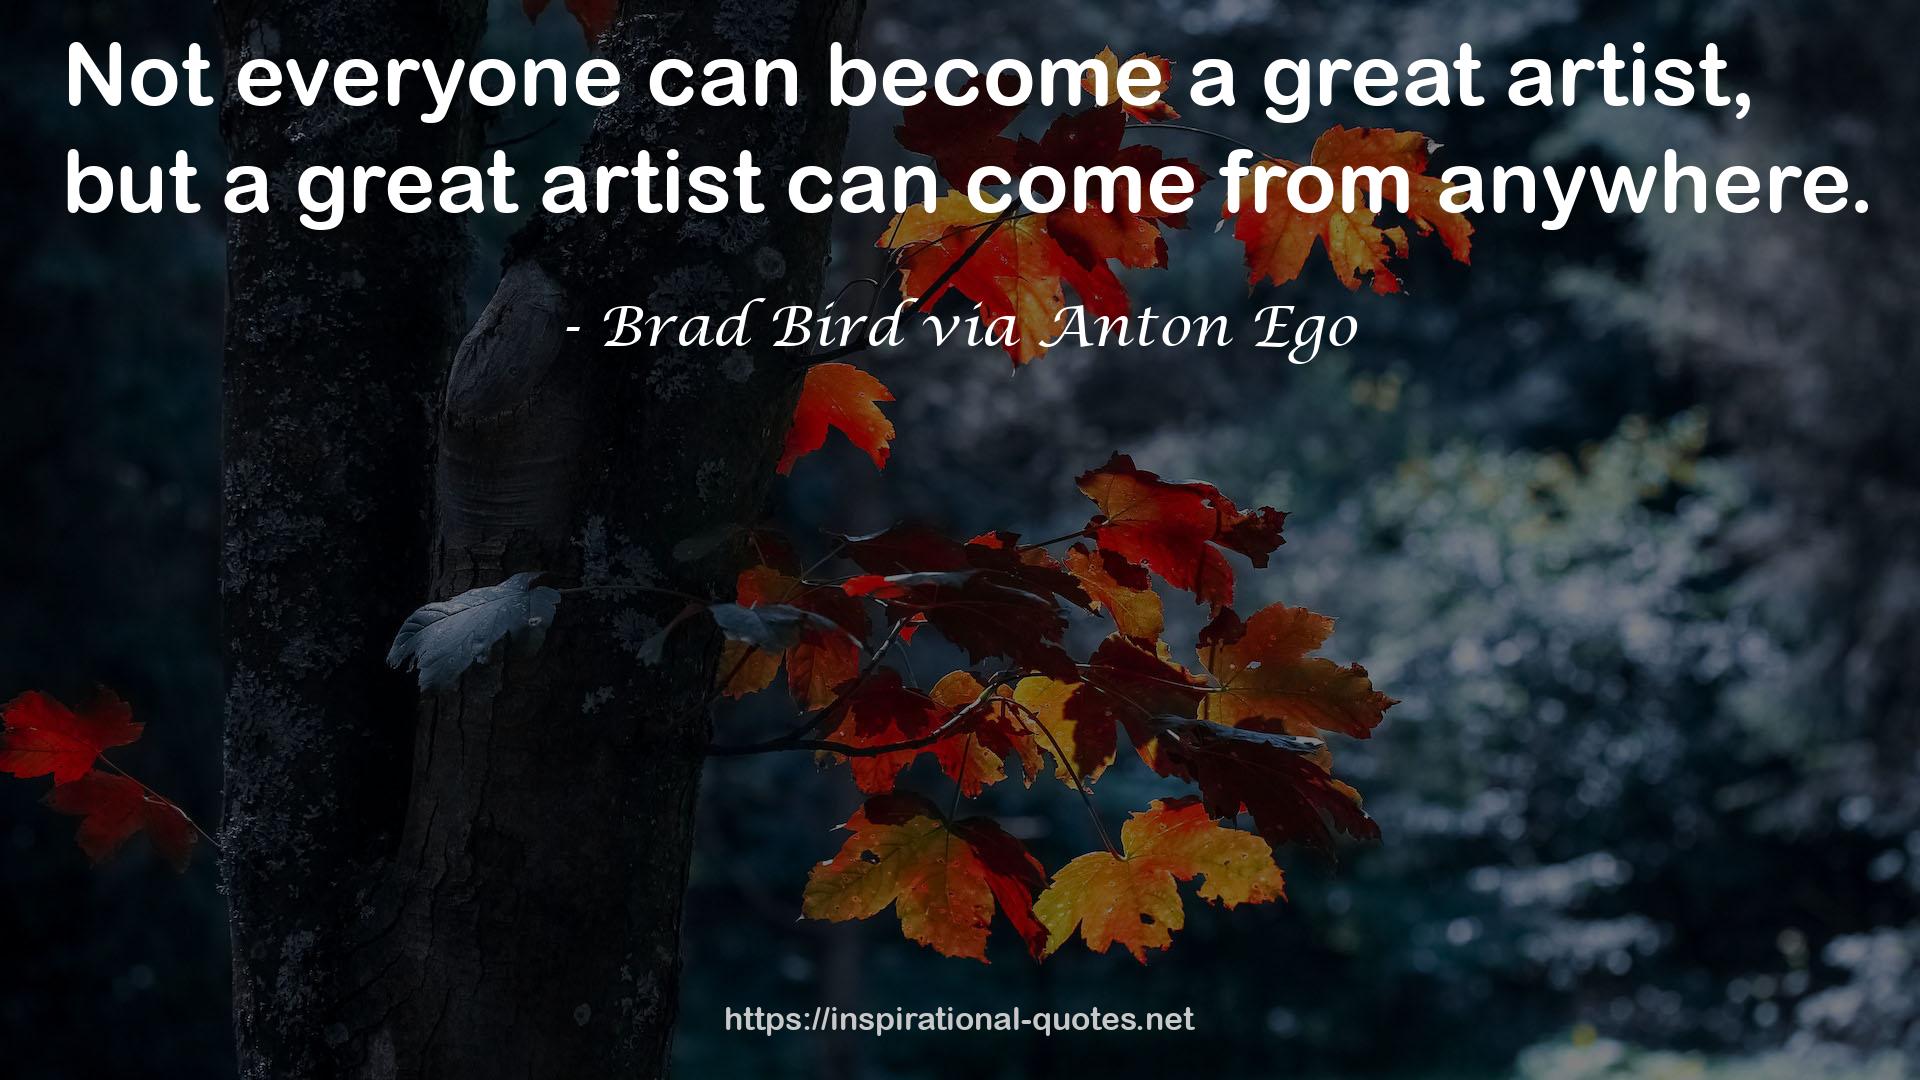 Brad Bird via Anton Ego QUOTES